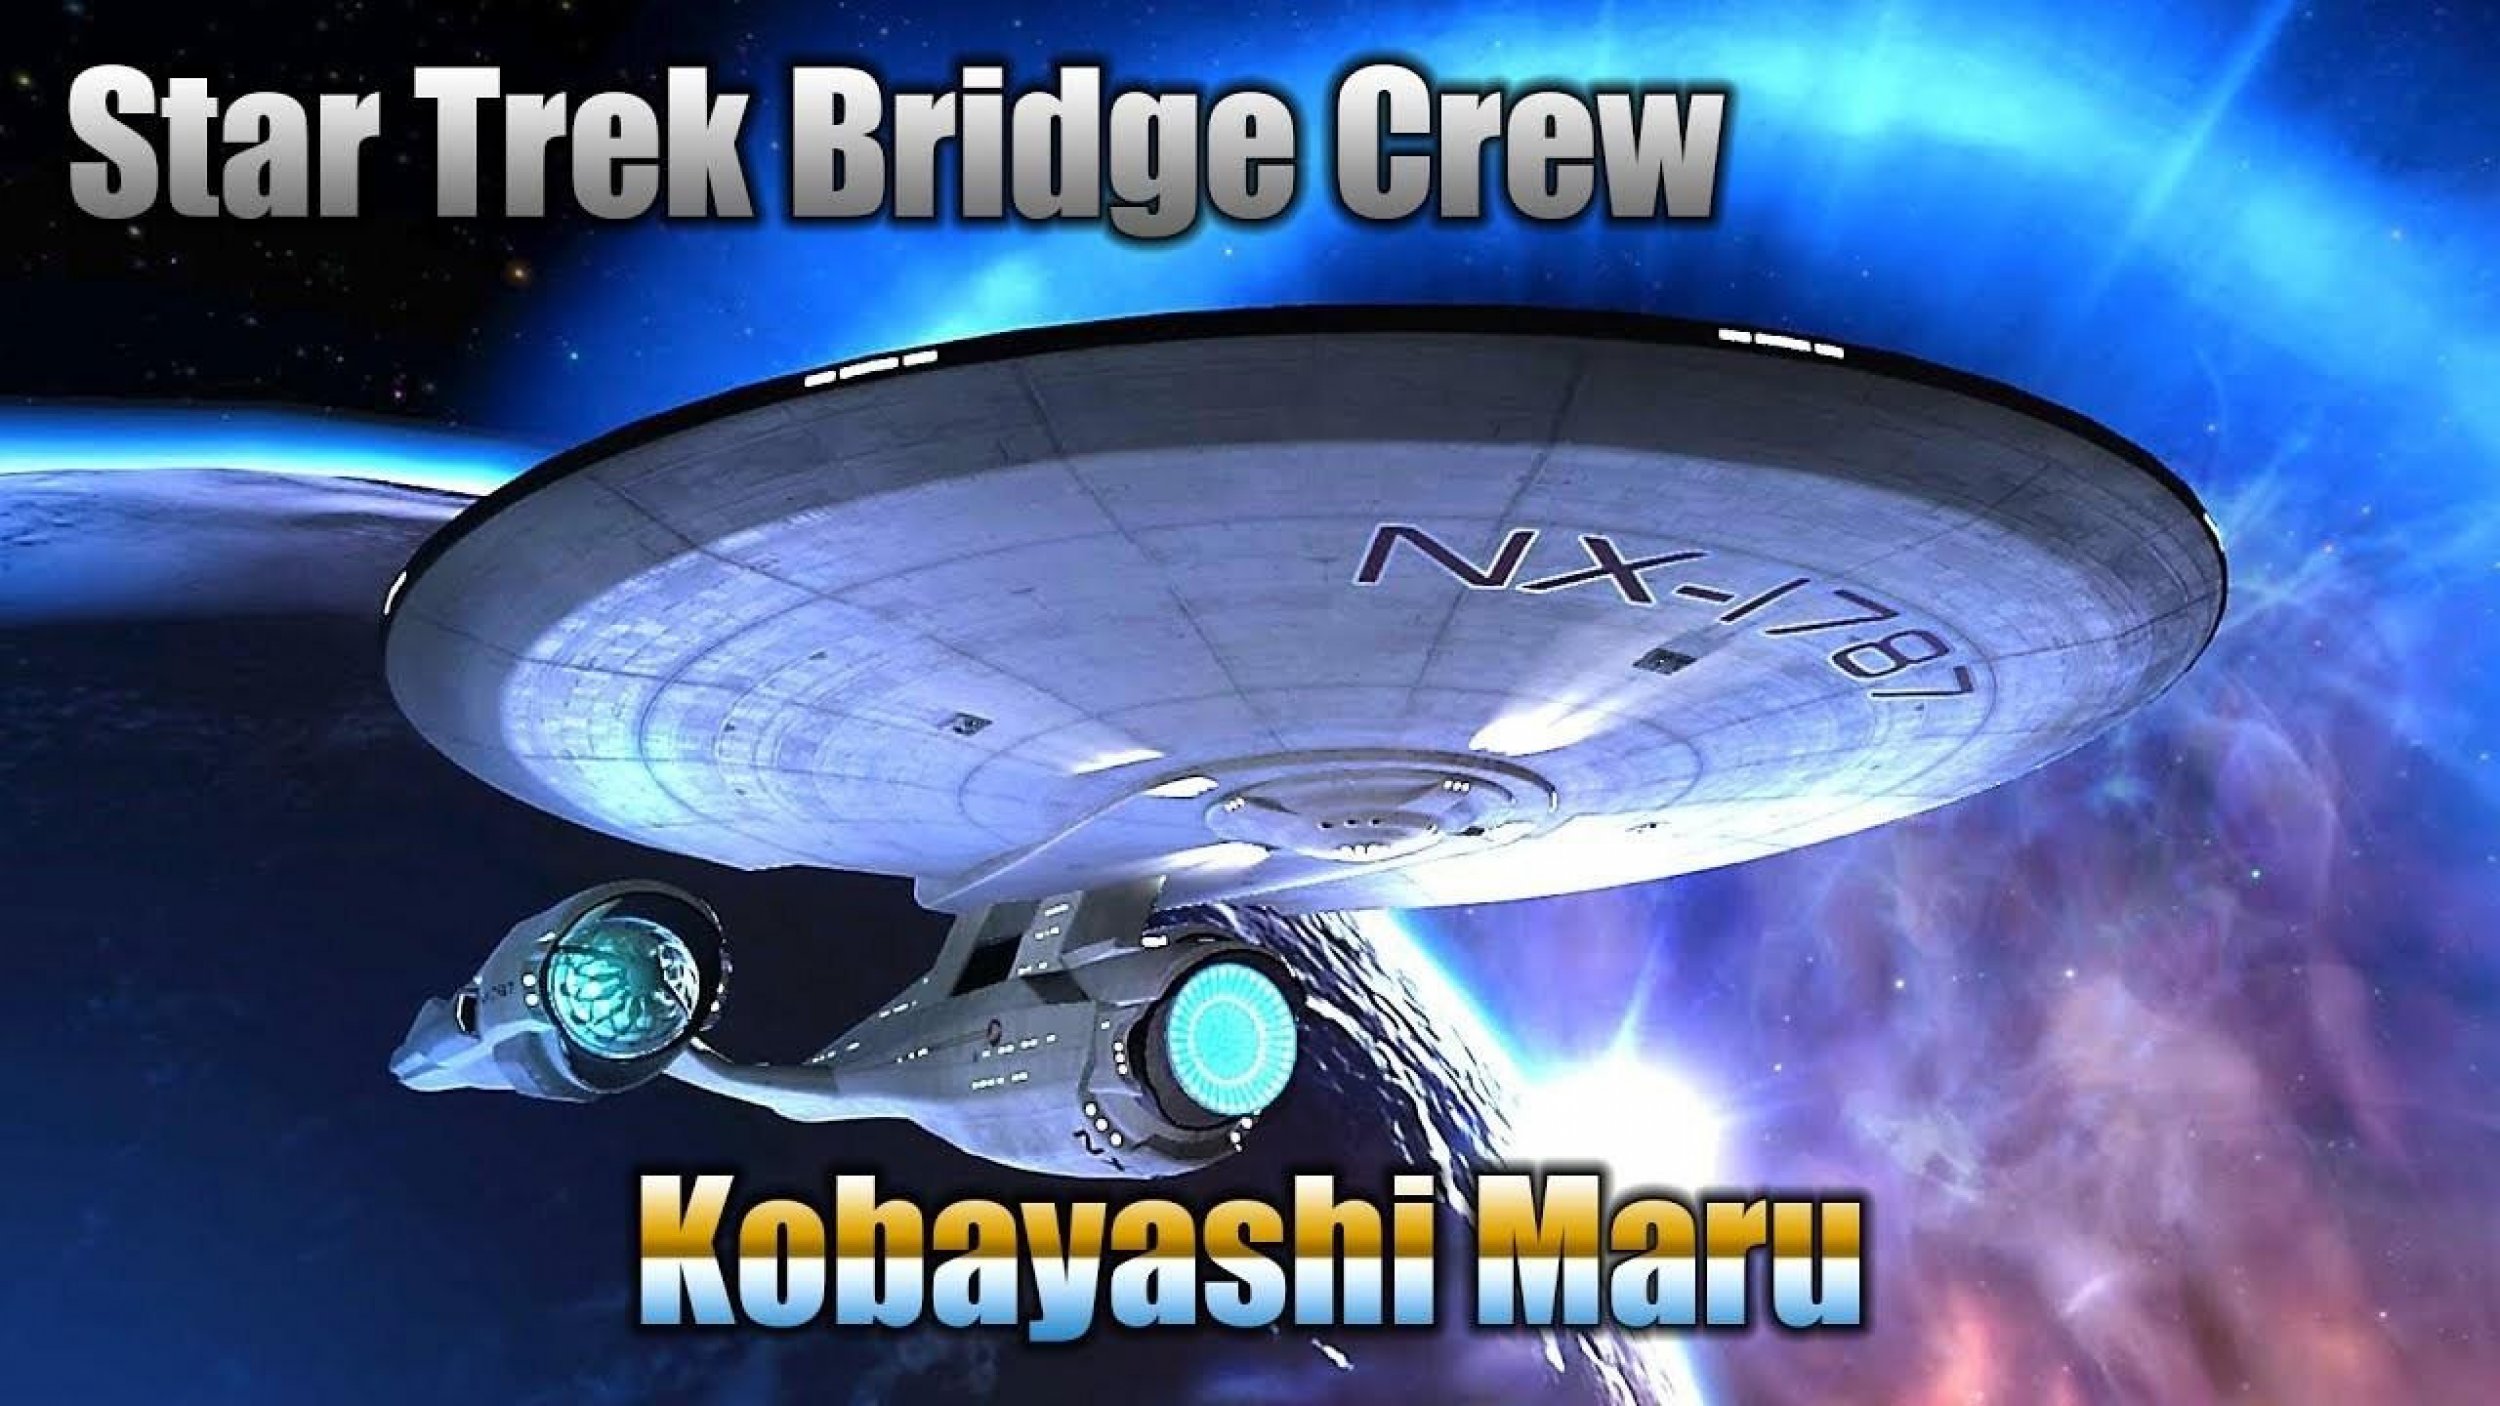 Star Trek Bridge Crew Kobayashi Maru Challenge